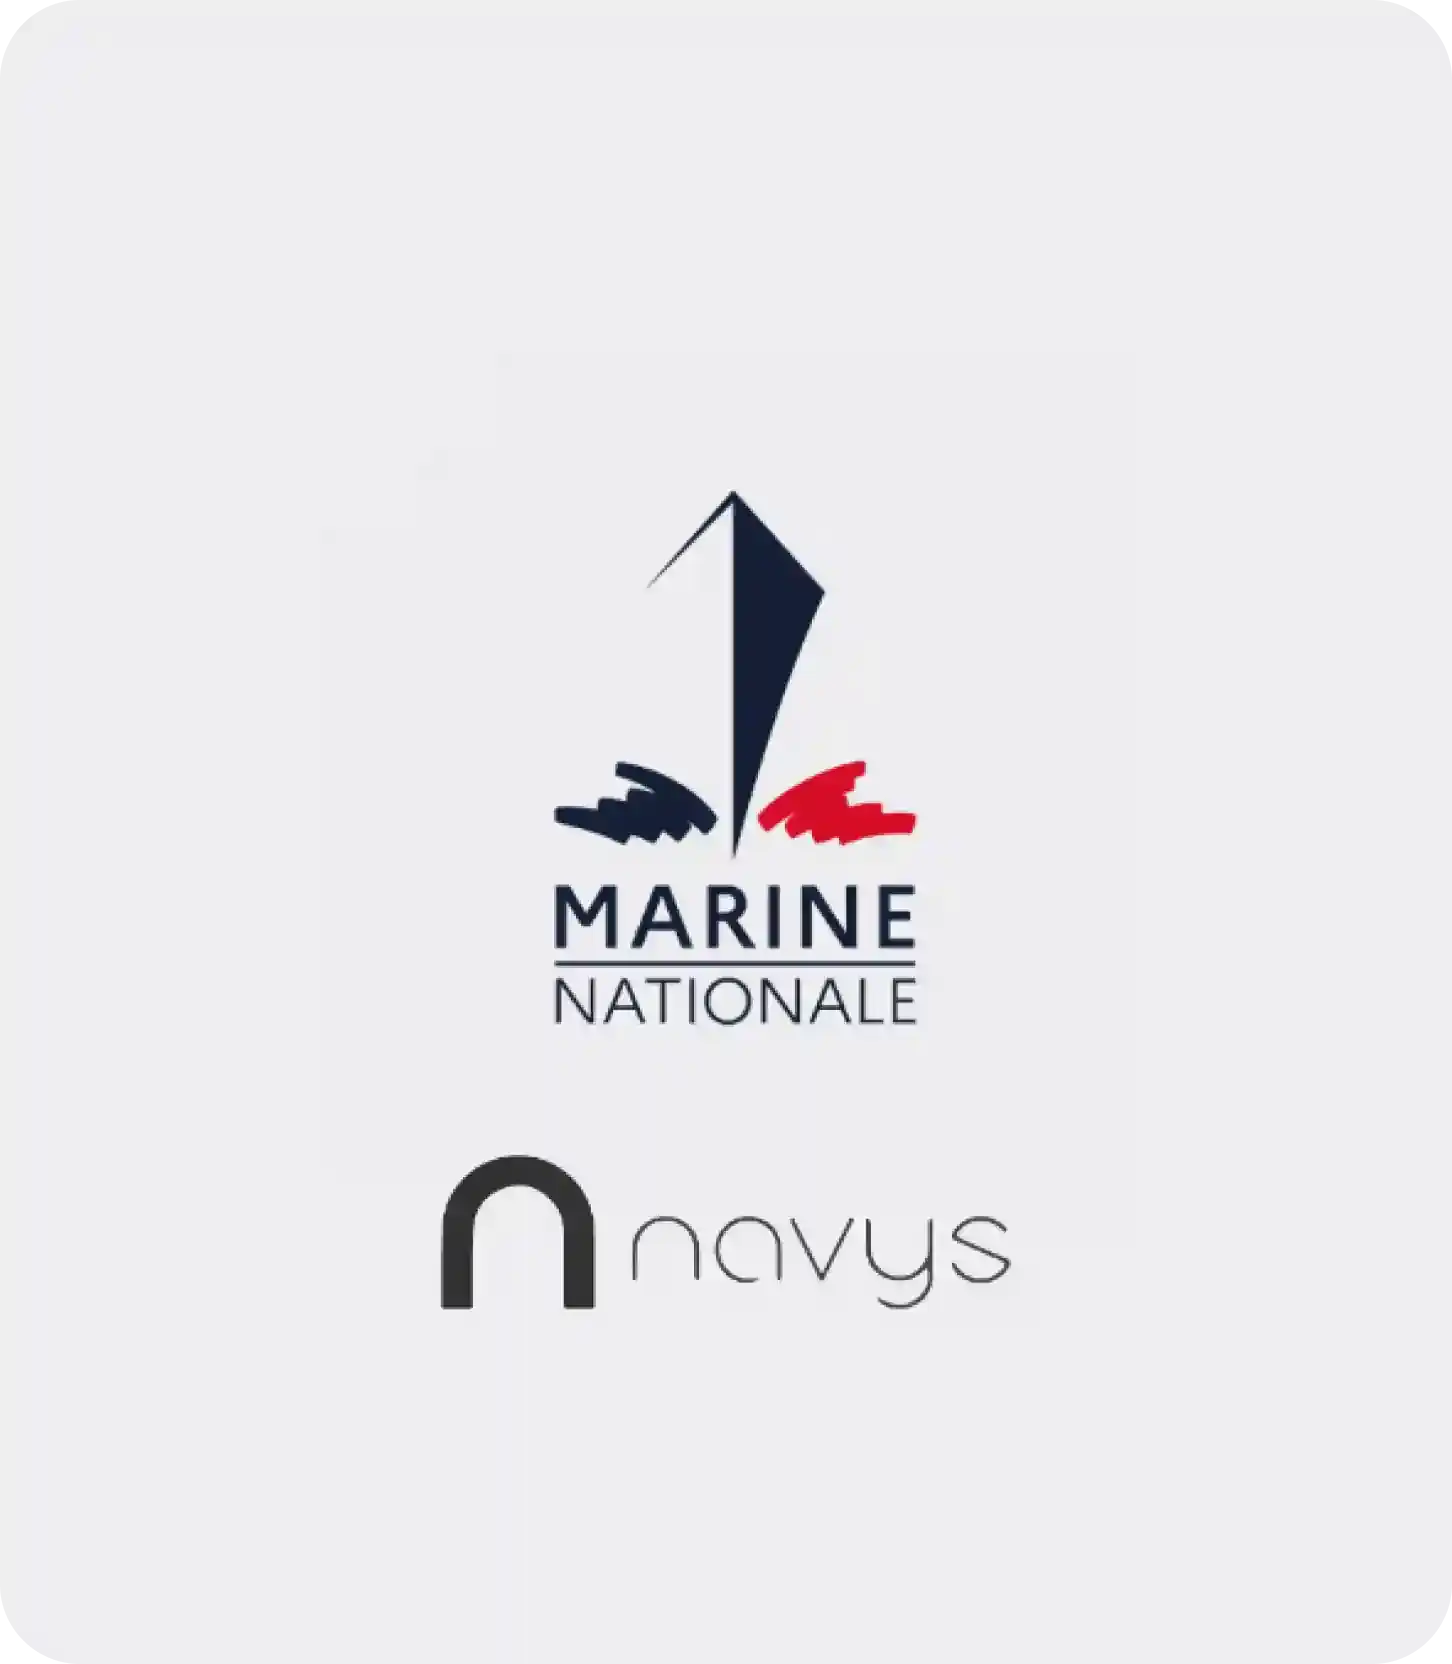 Logos Marine Nationale & Navys